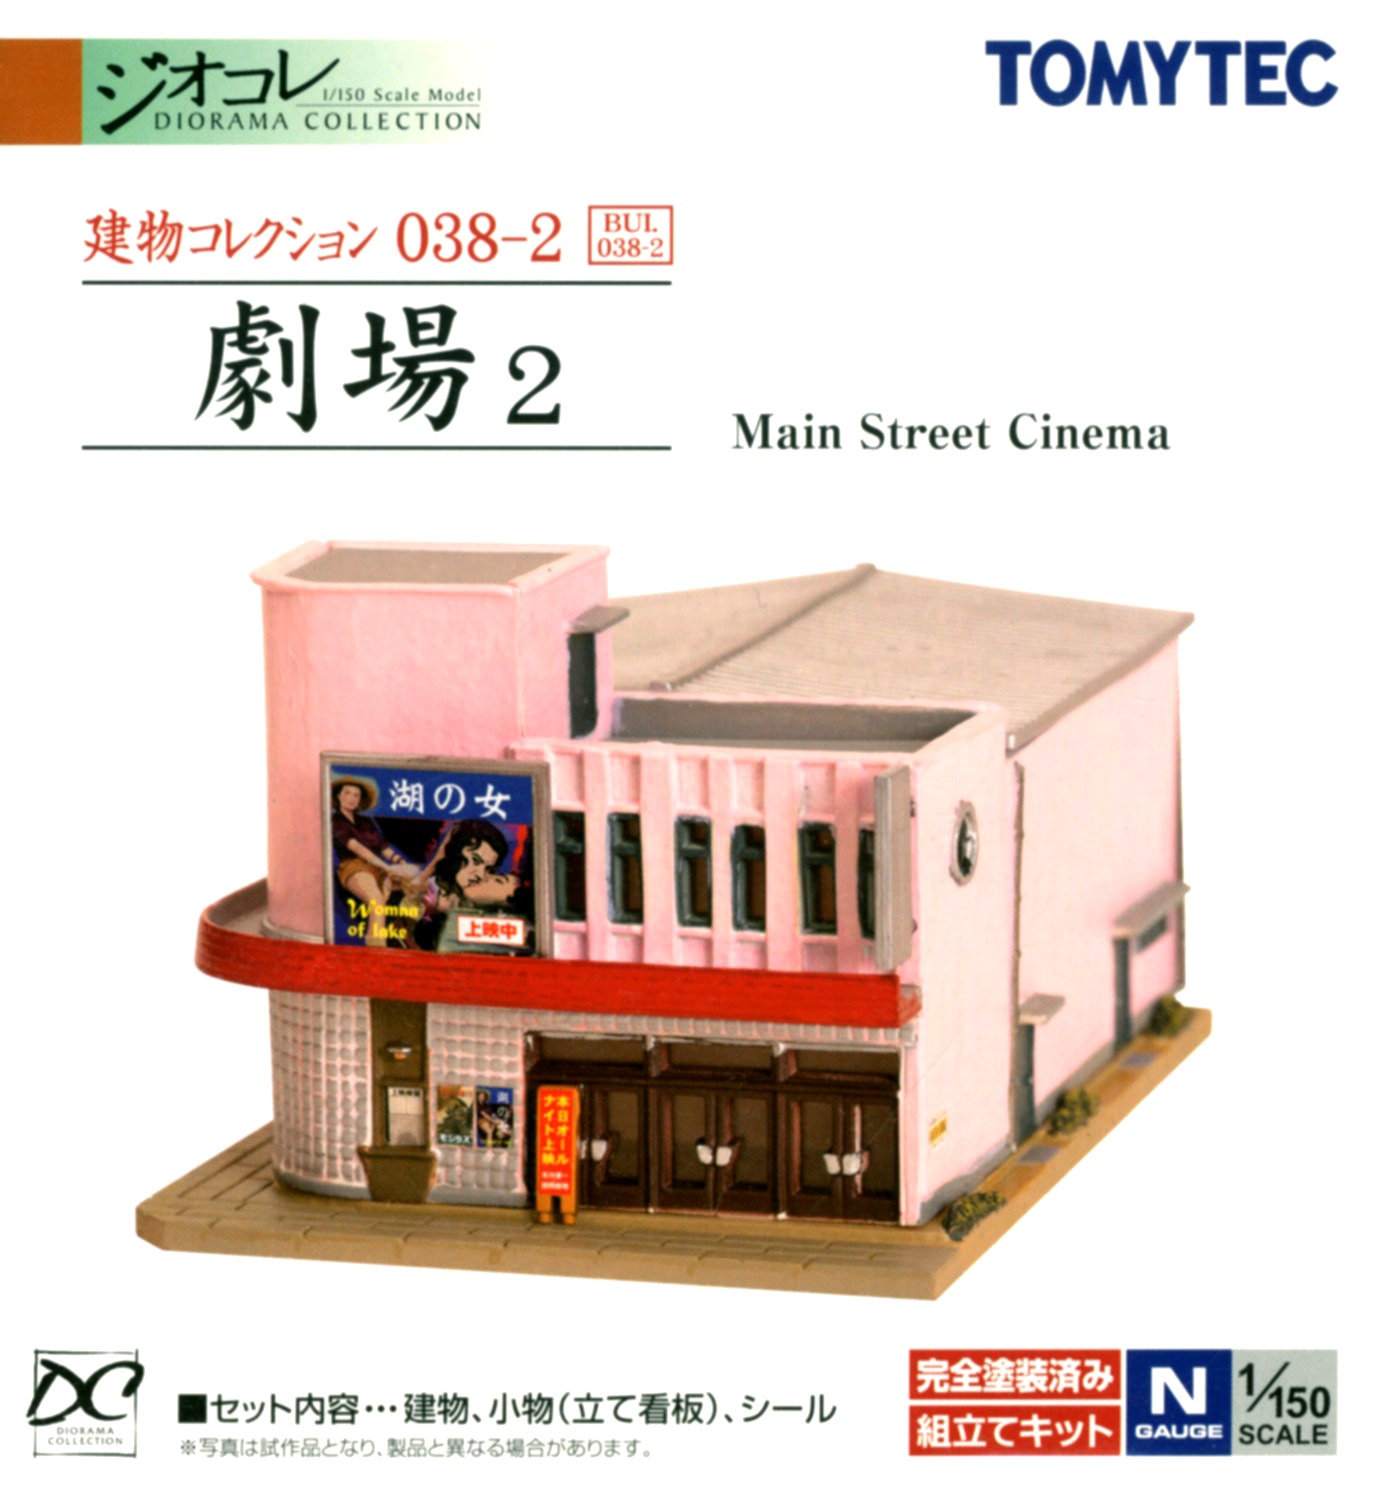 Tomytec Building 038-2 Theater B Main Street Cinema 1/150 N New Japan